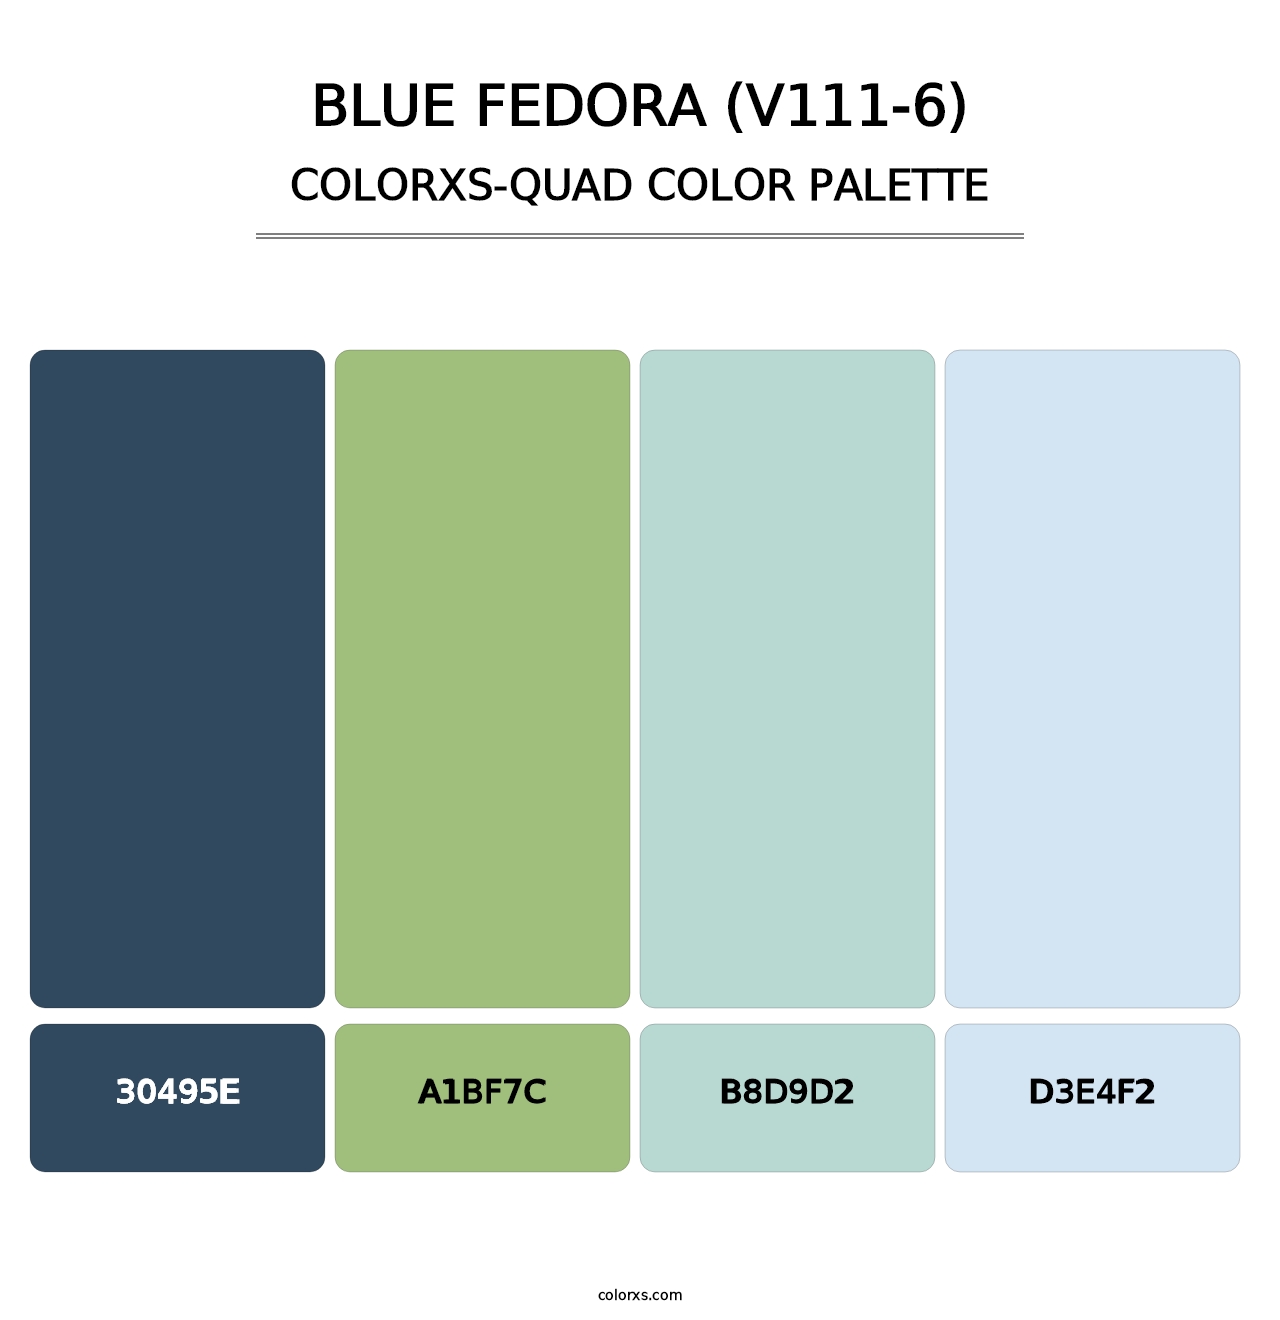 Blue Fedora (V111-6) - Colorxs Quad Palette